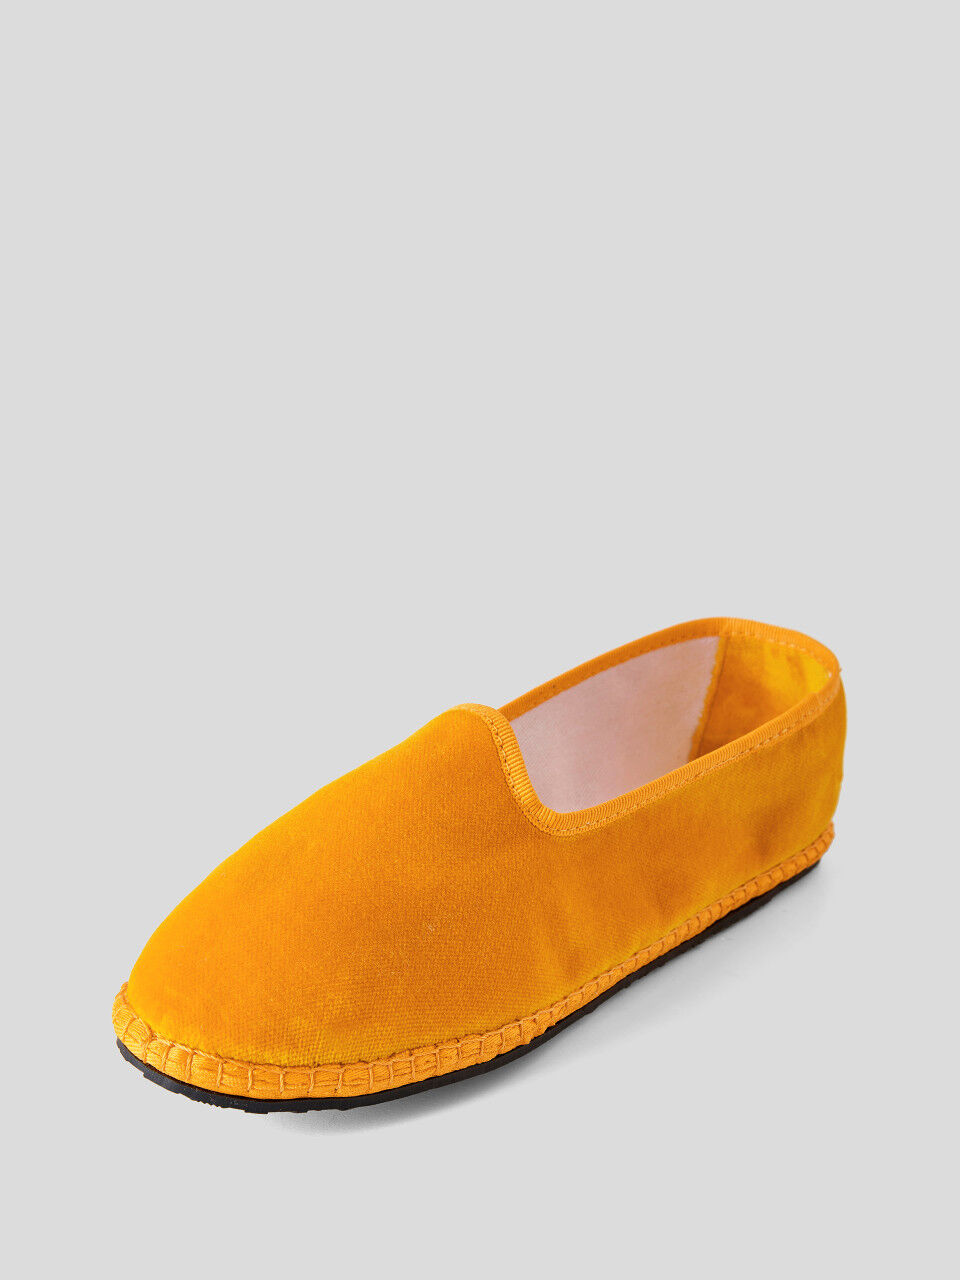 benetton yellow shoes